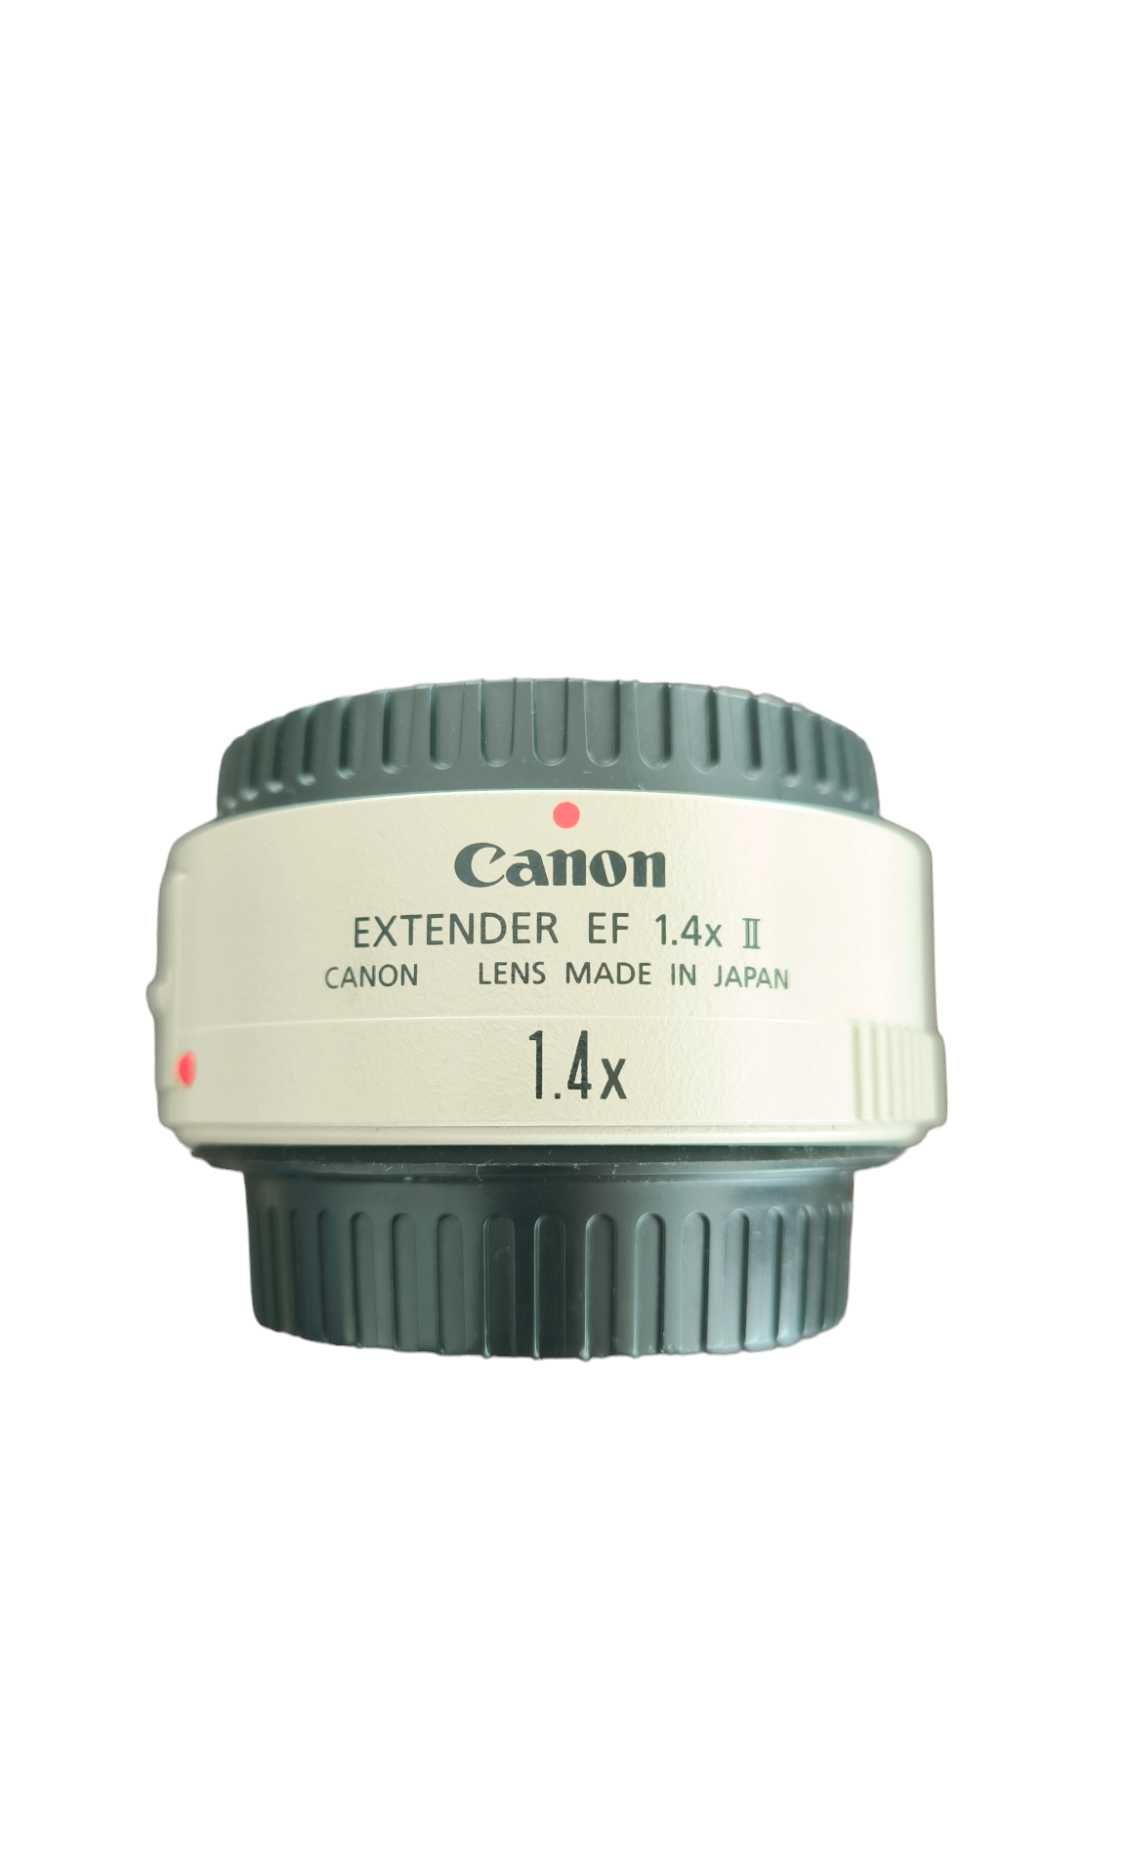 Canon extender EF 1.4 II